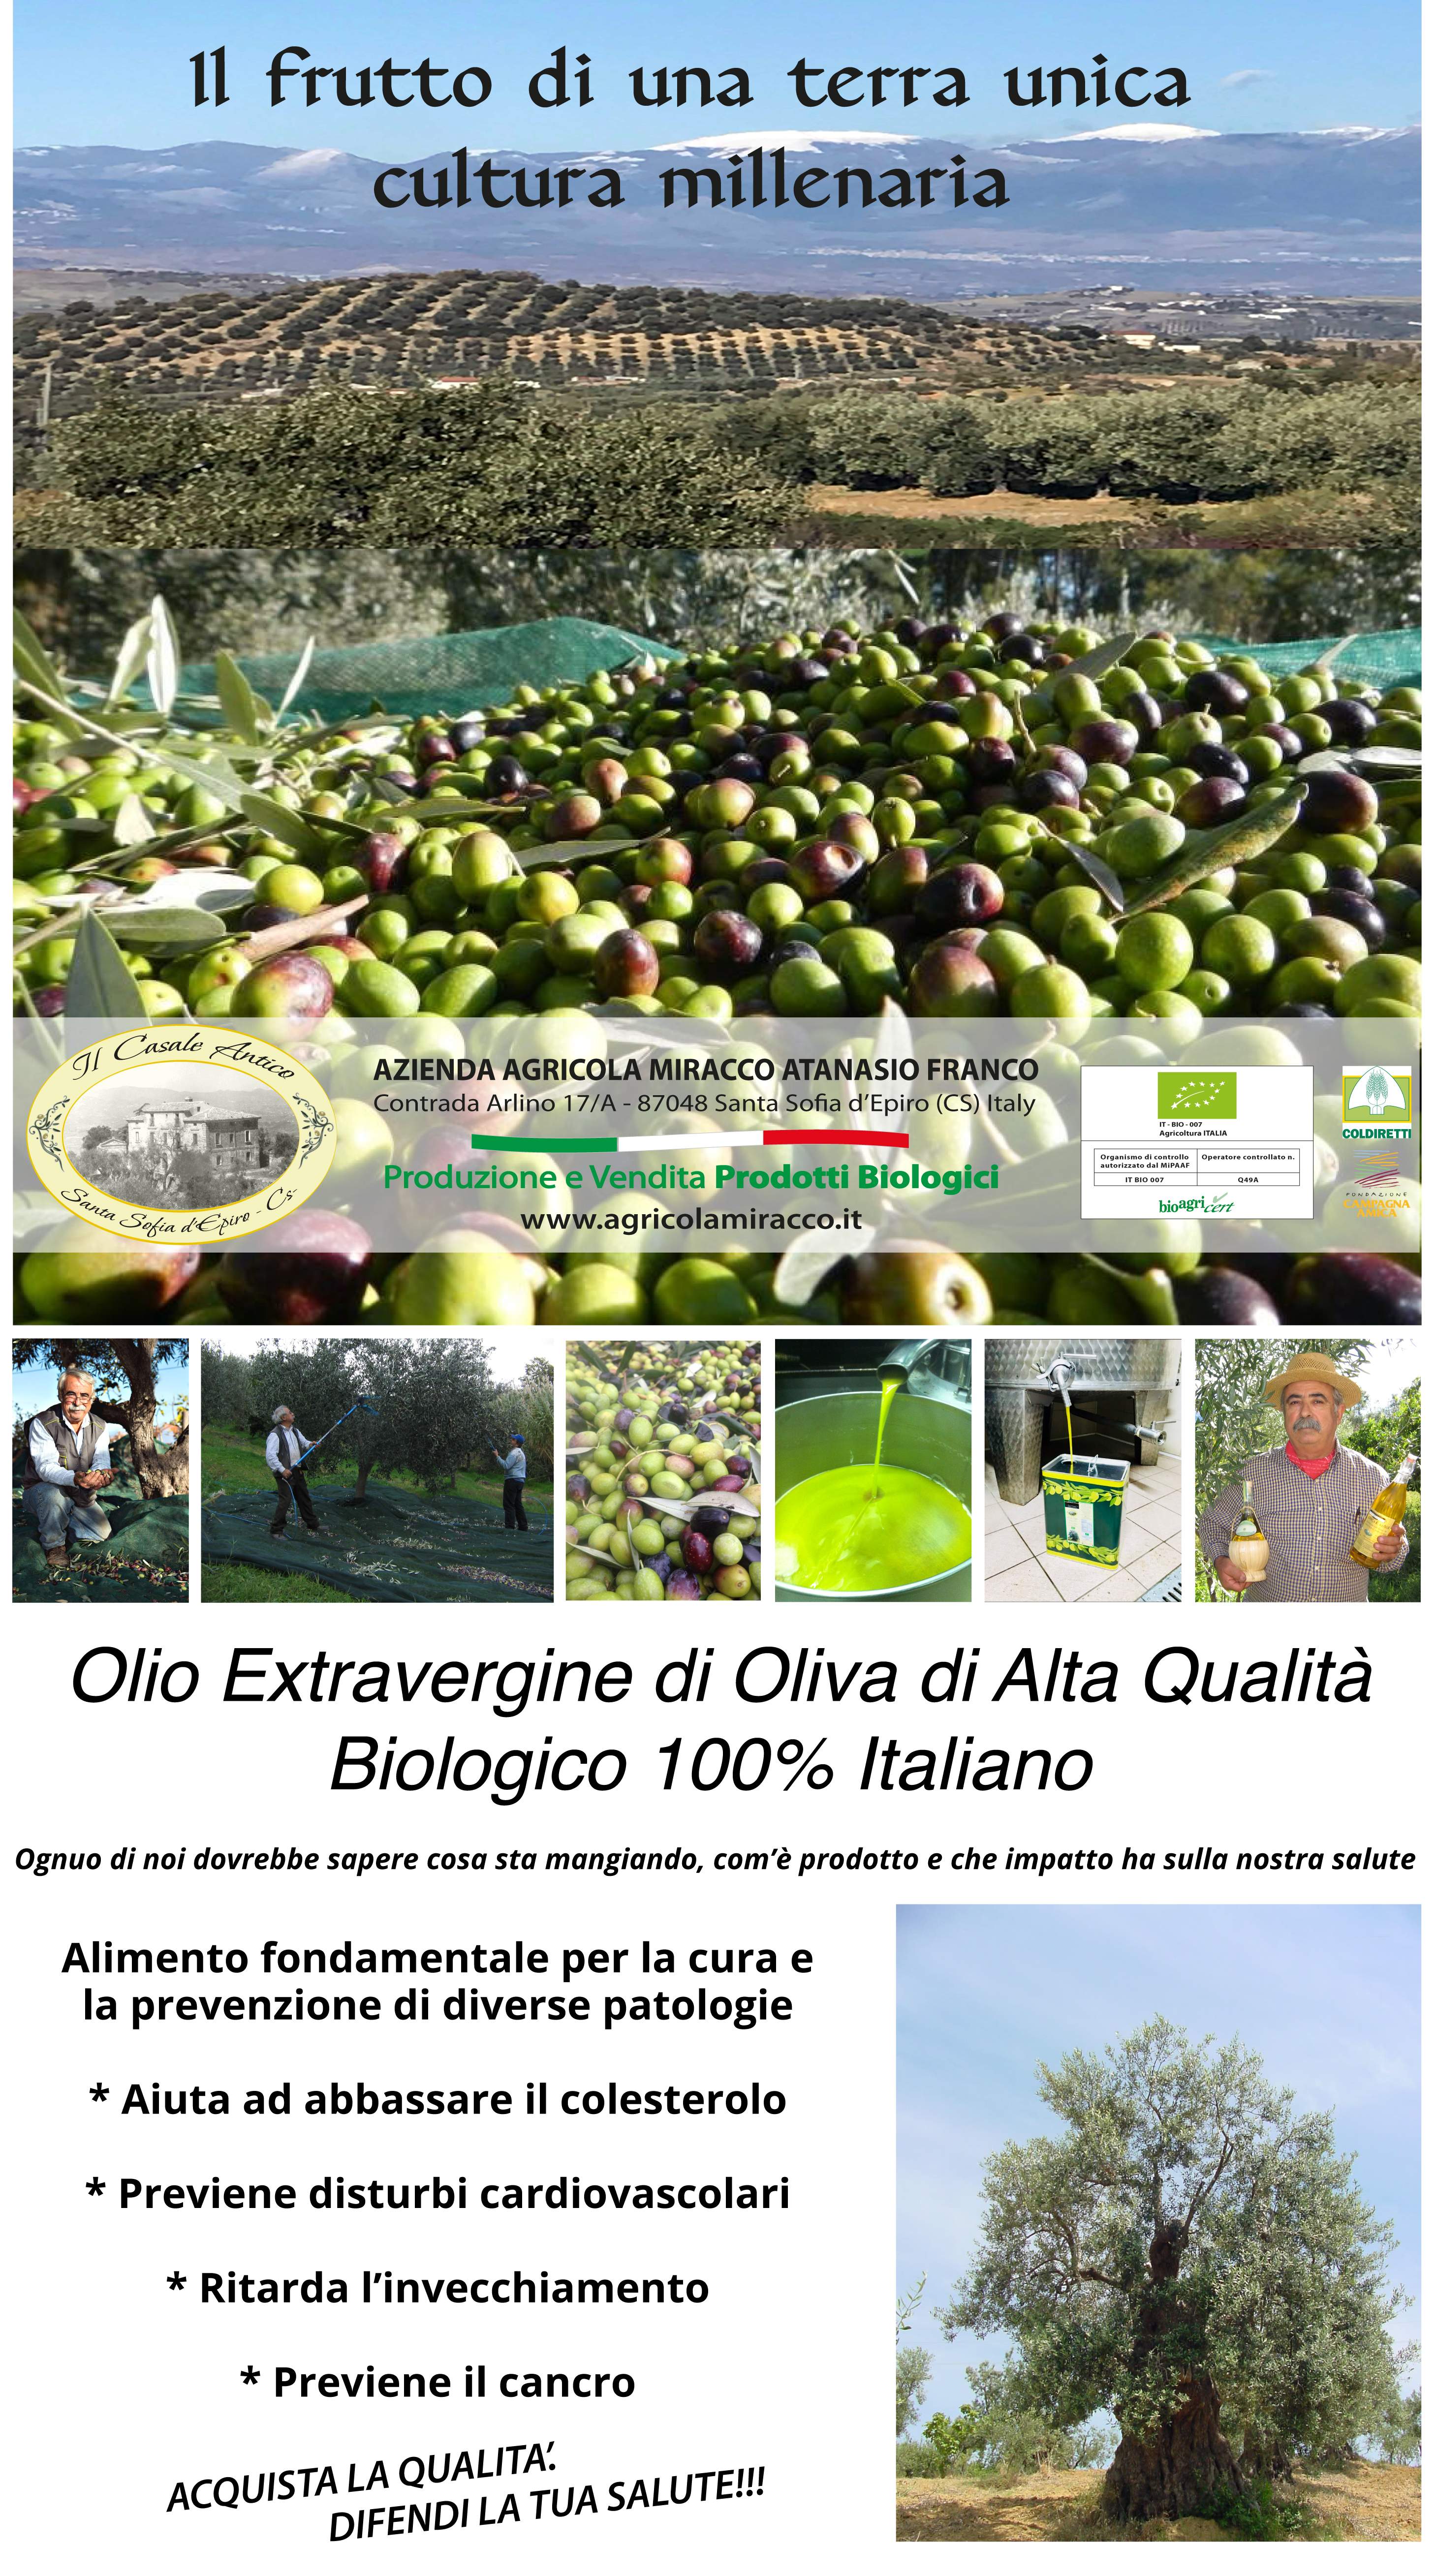 Olio Extravergine di Oliva Biologico 100% Italiano 1 Latta da 5 Lt